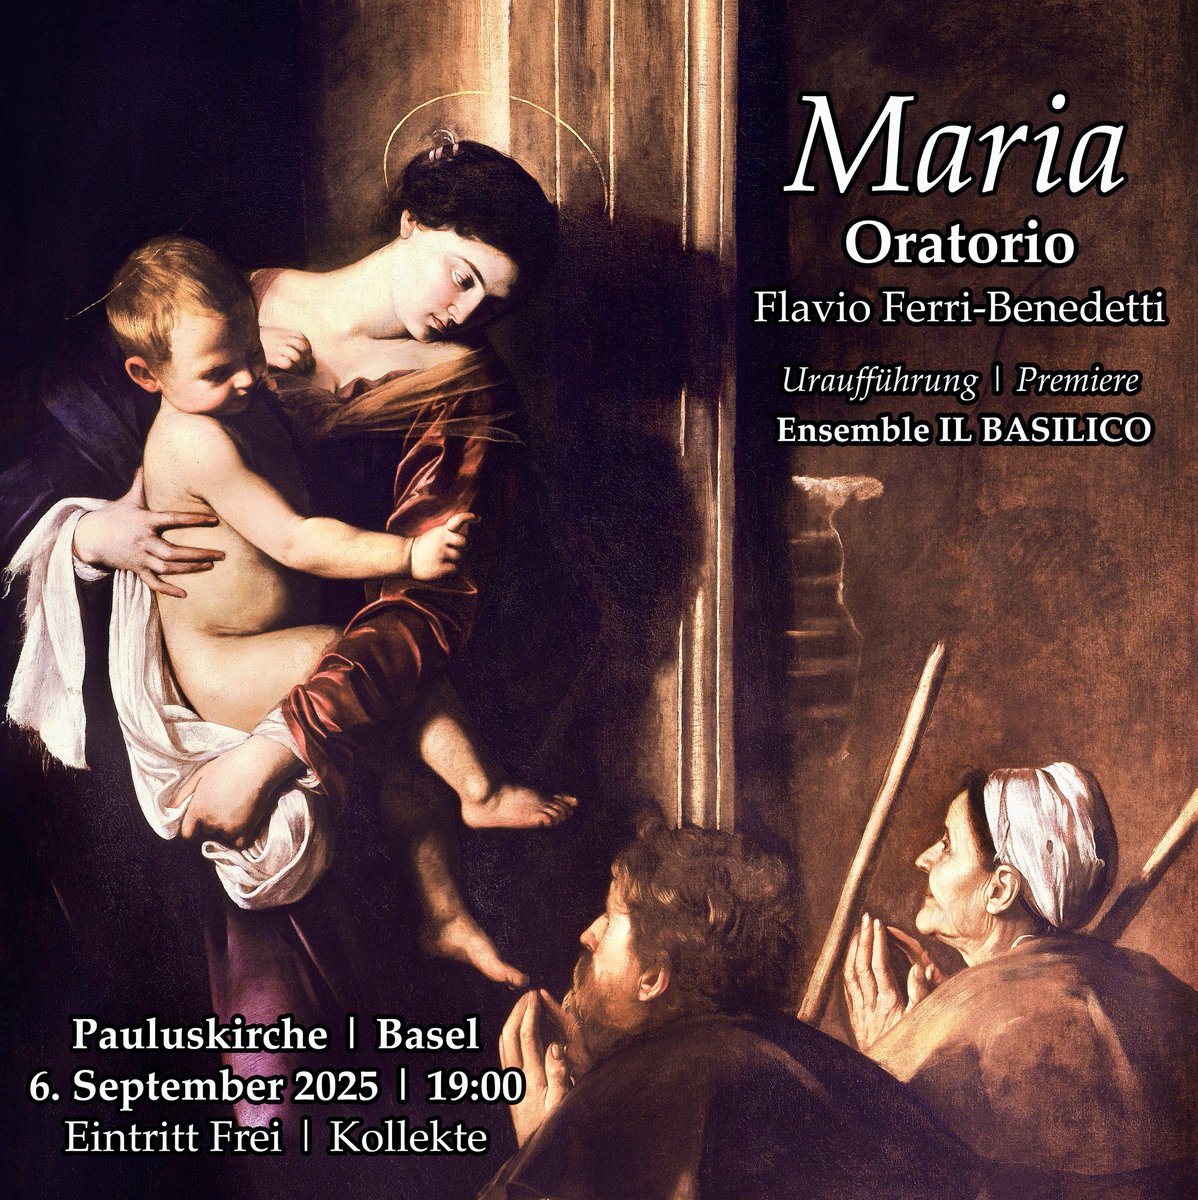 World Premiere - 6th September 2025 in Basel!
Stay Tuned! 

#oratorio #worldpremiere #baroquemusic #sacredmusic #maria #virginmary #salveregina